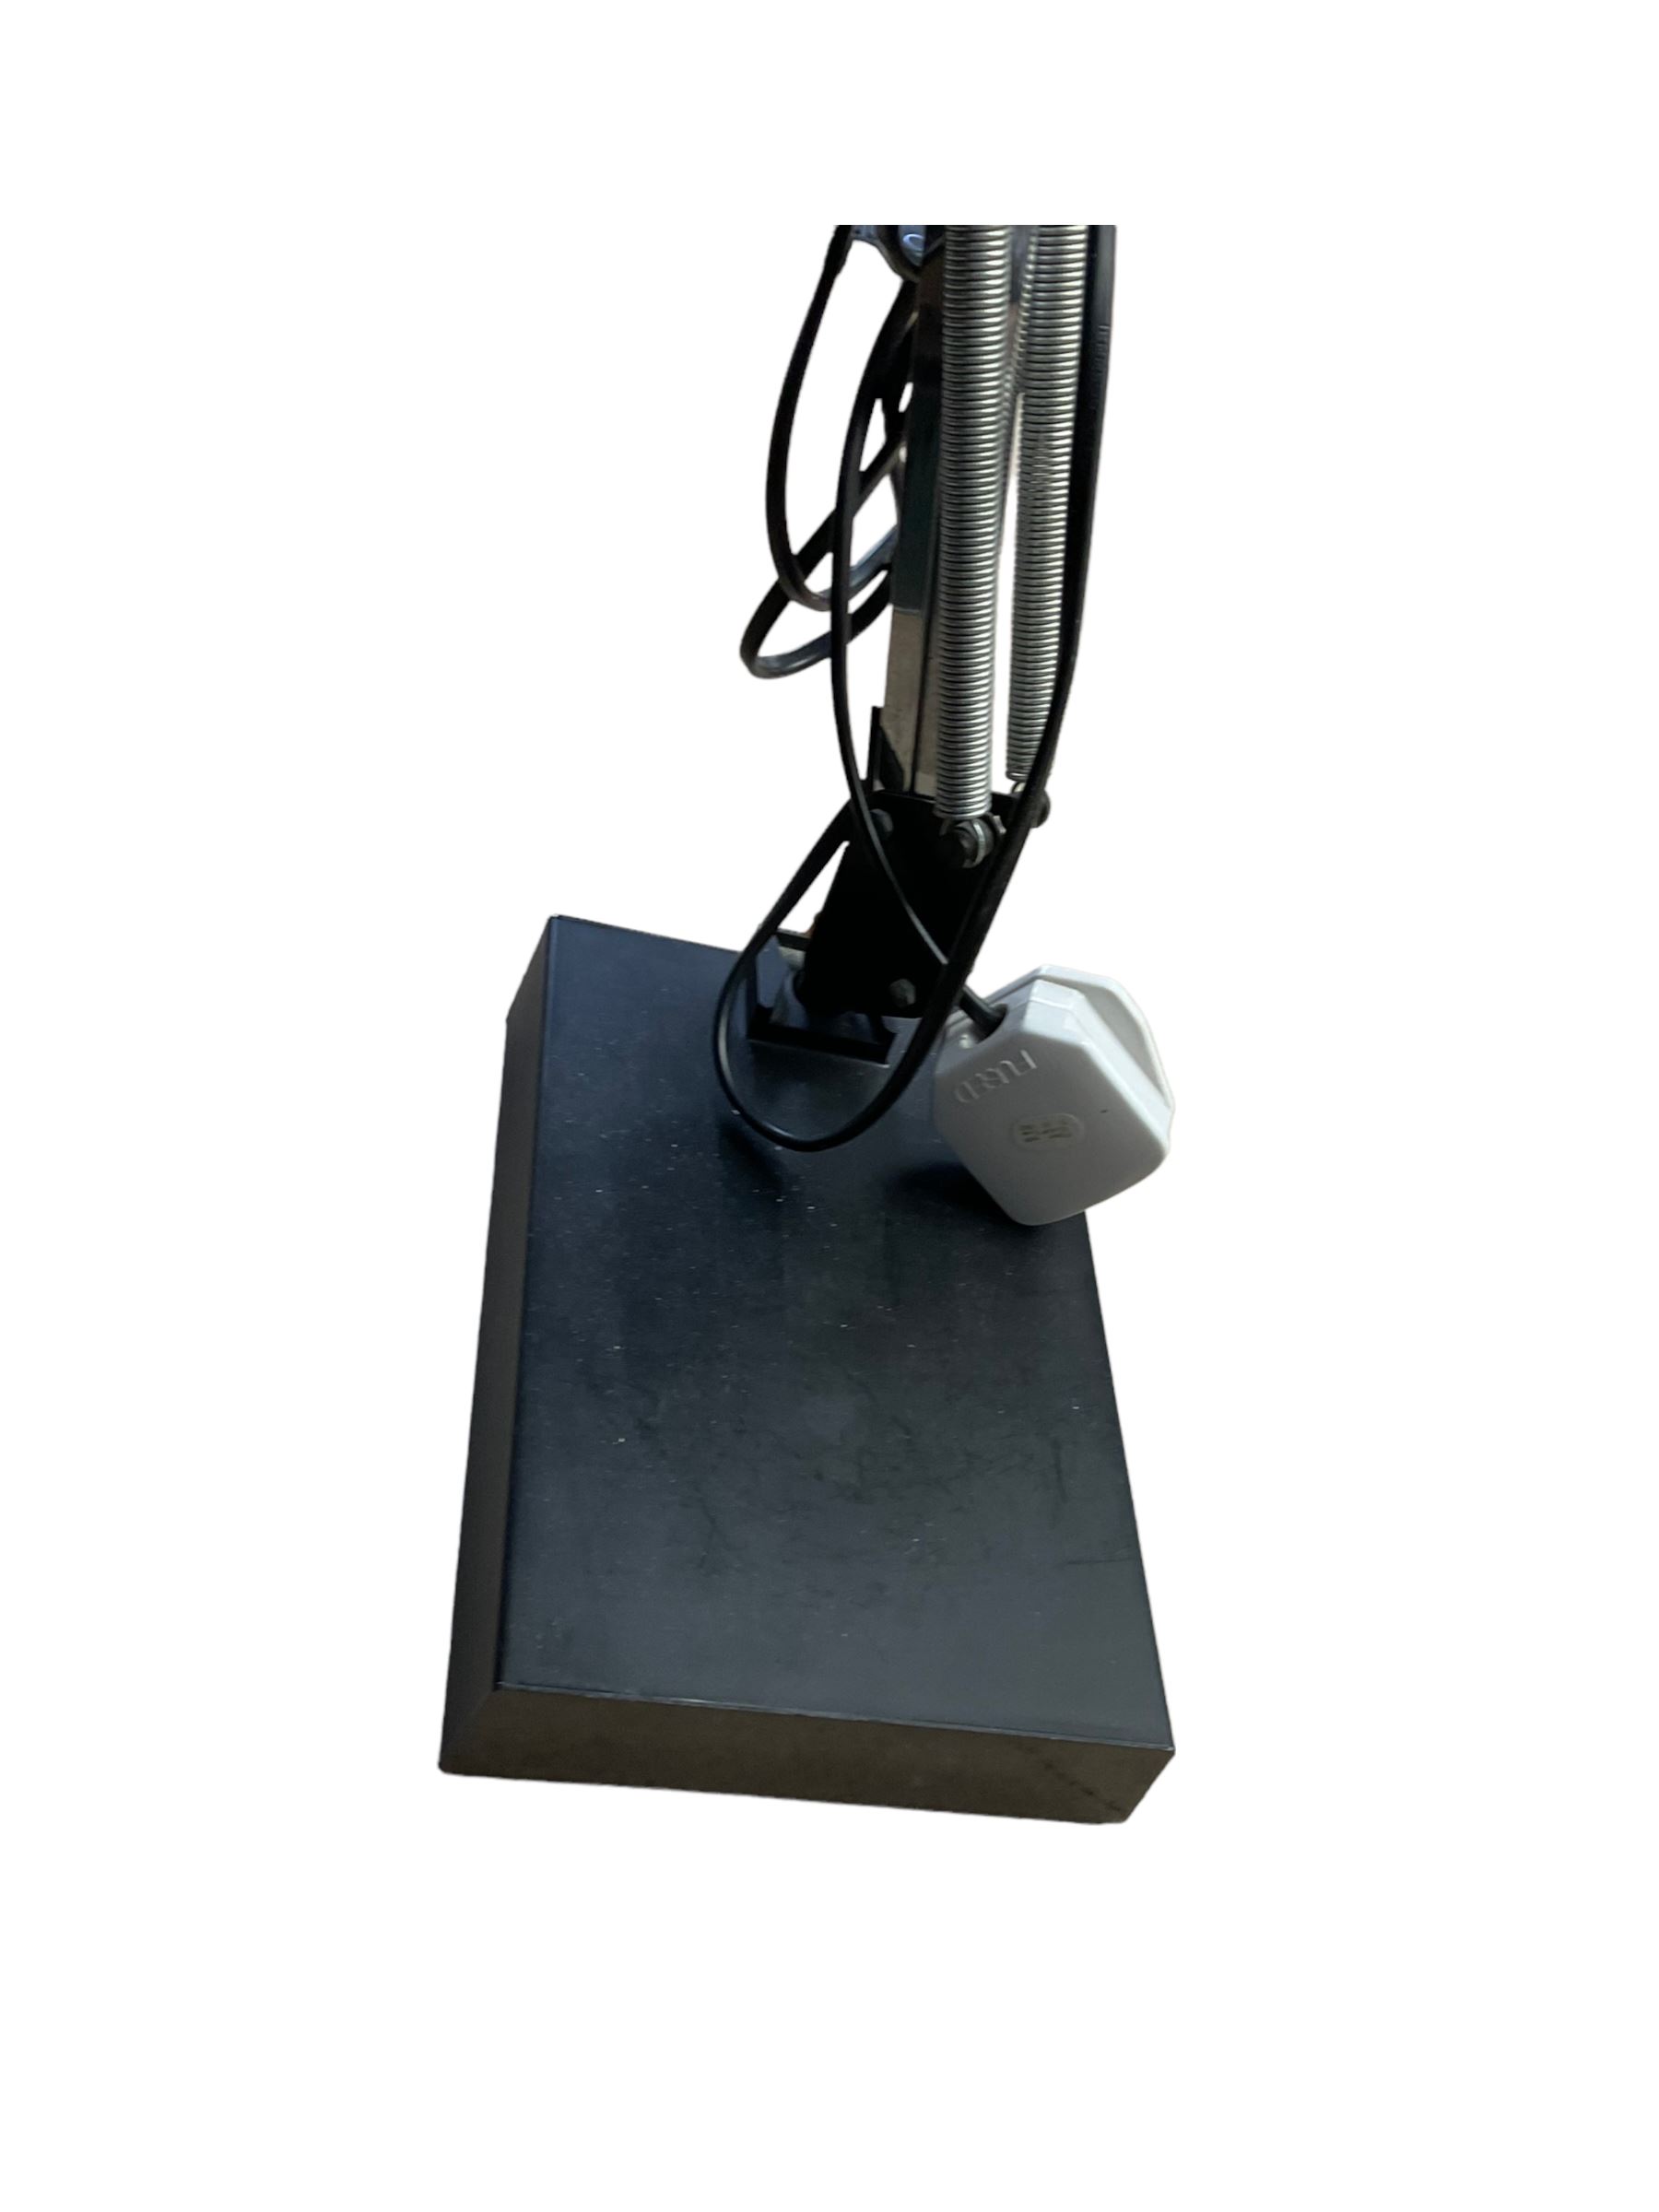 Angle poise style lamp upon a rectangular base - Image 4 of 4